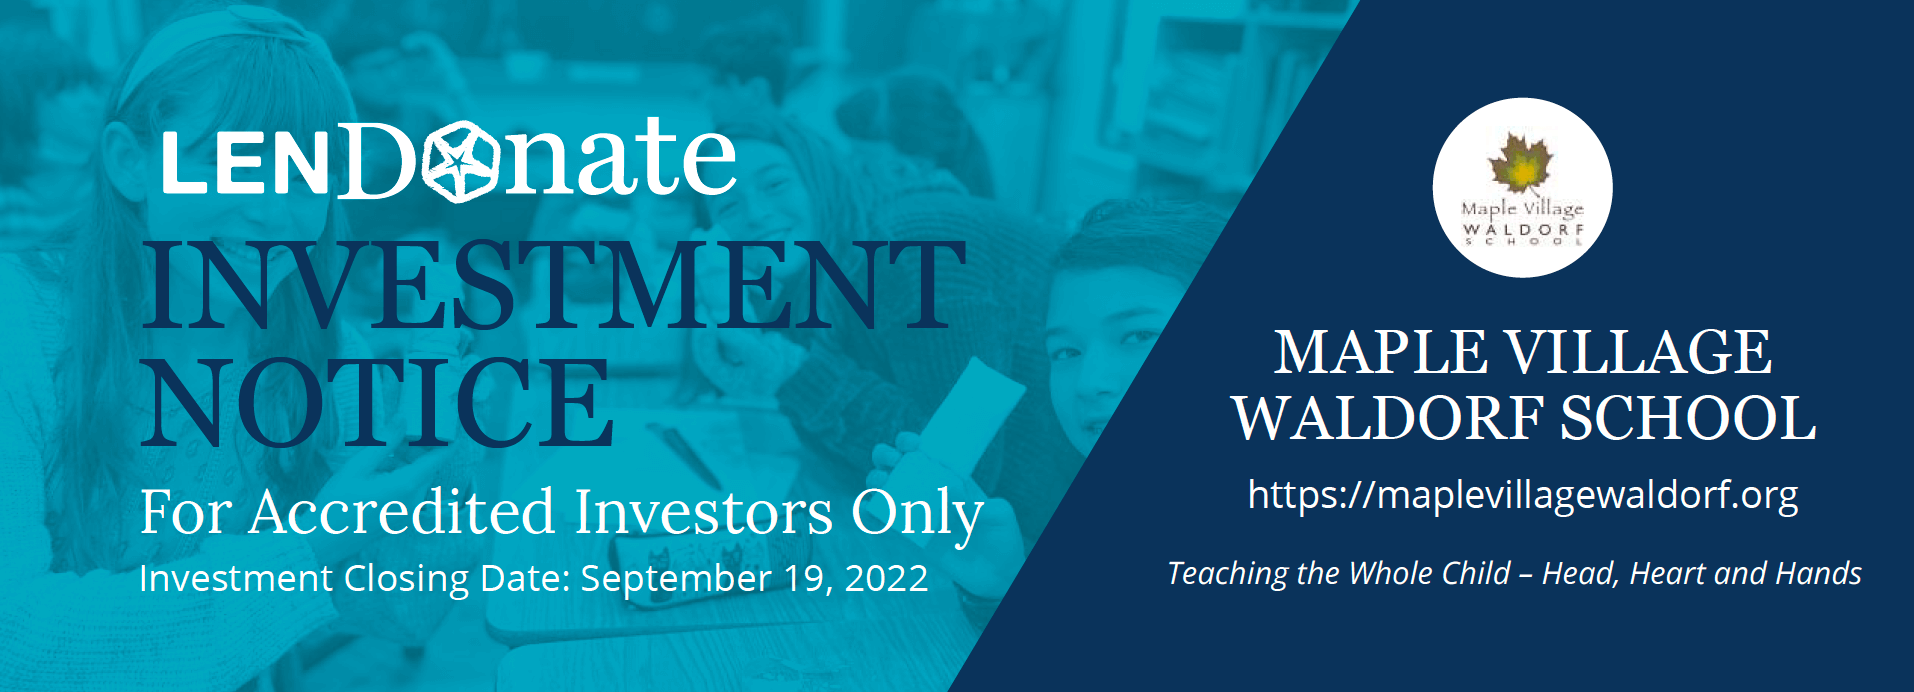 LENDonate investment notice details for Maple Village Waldorf School